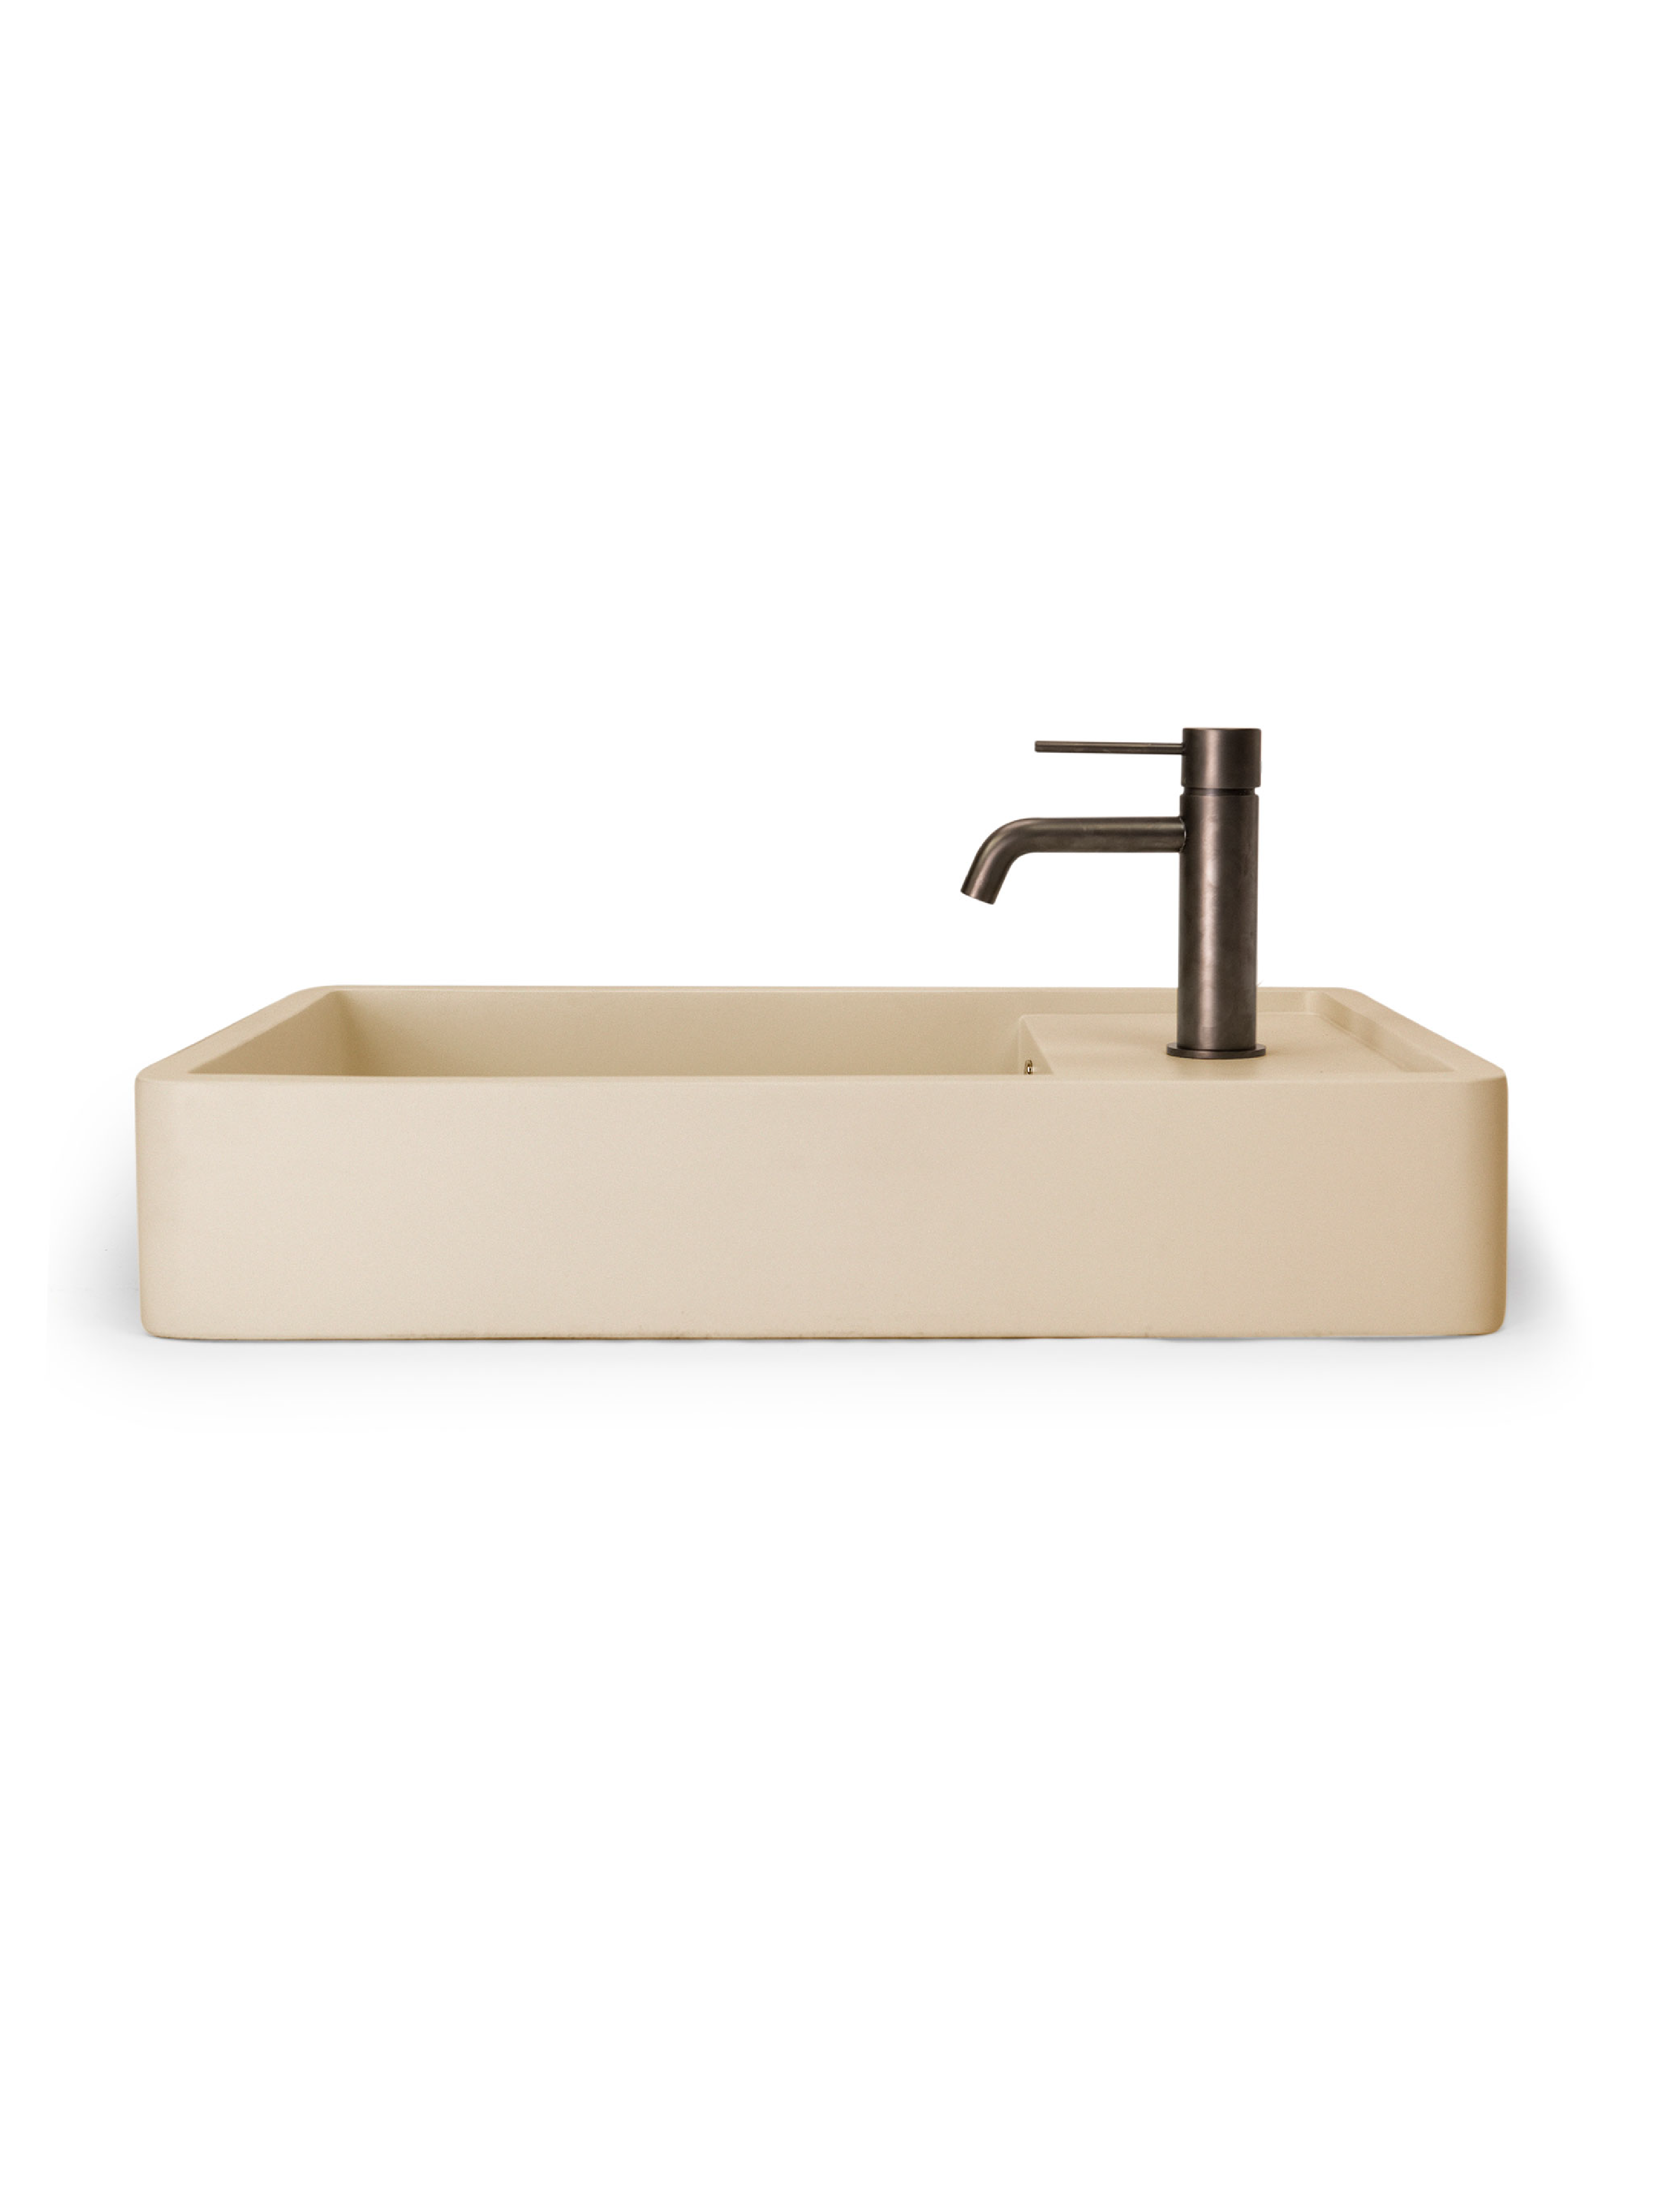 Shelf 03 Concrete Countertop basin w/ Tap Hole & Overflow Kit (Avail in 14 Colours)